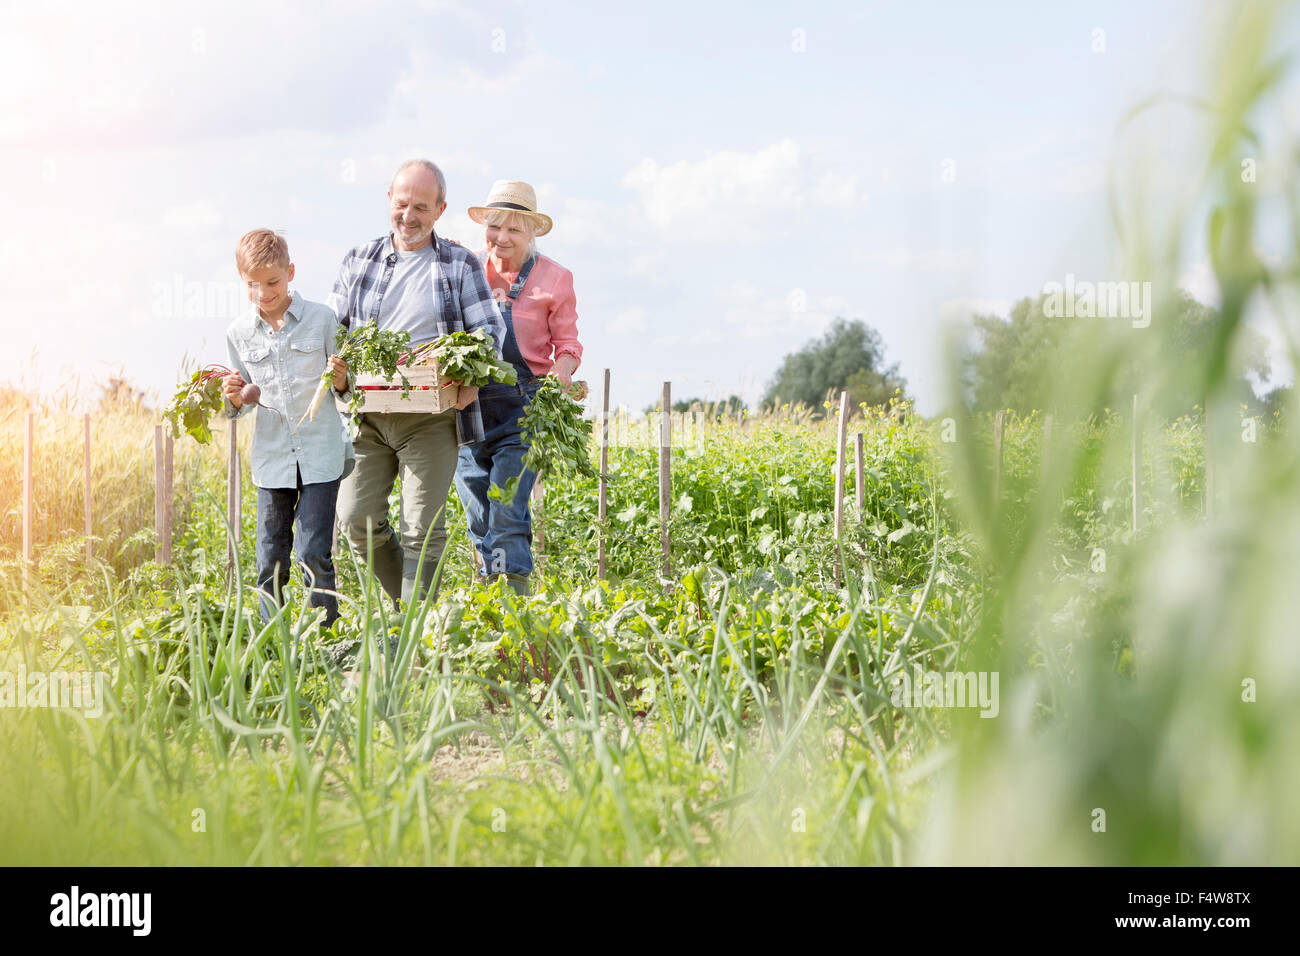 Grandparents and grandson harvesting vegetables in sunny garden Stock Photo